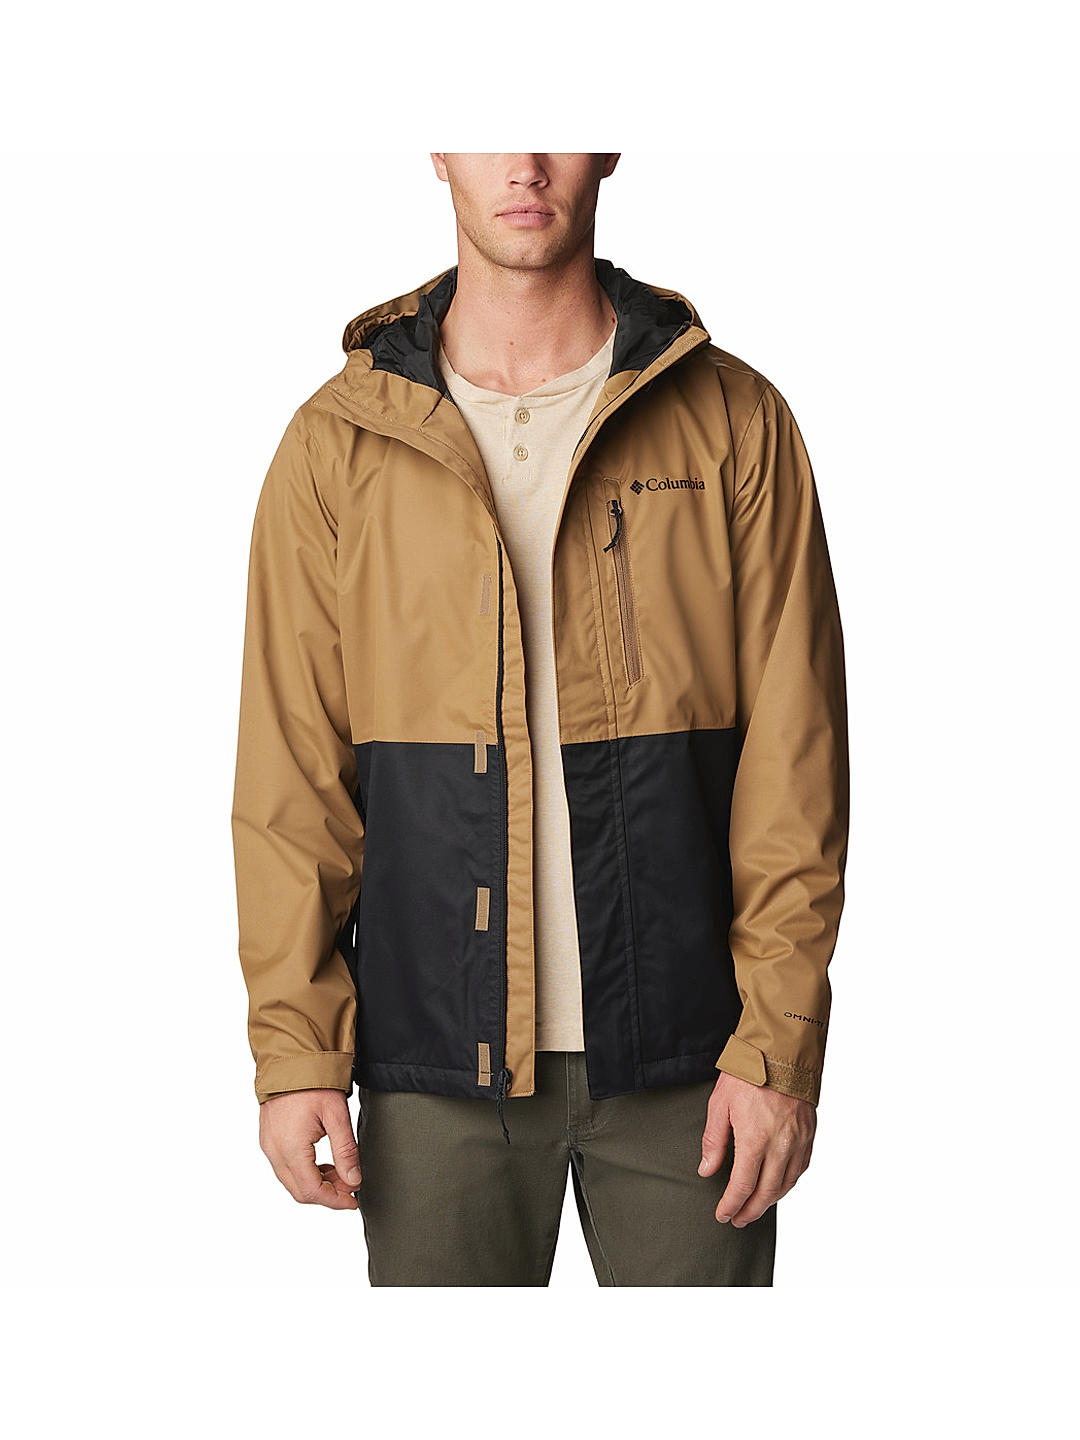 Buy Brown Hikebound Jacket for Men Online at Columbia Sportswear | 518119